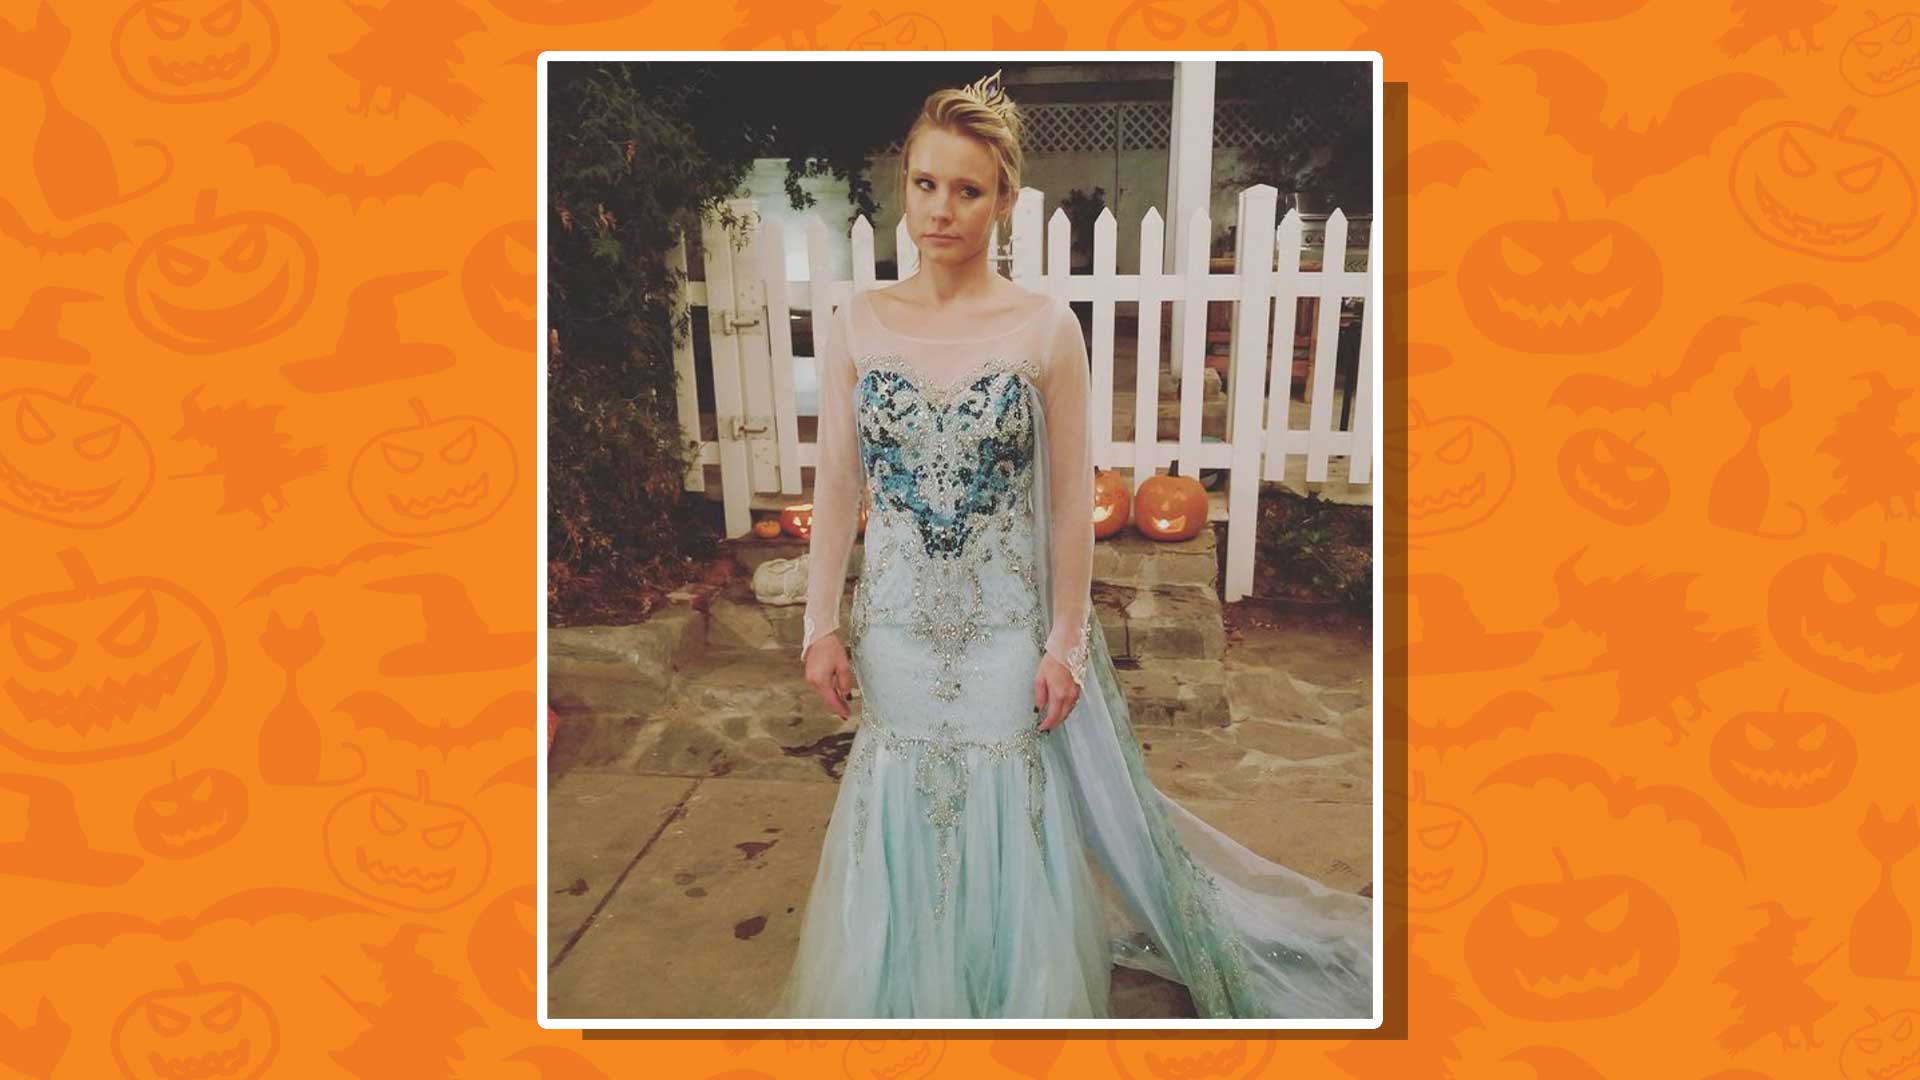 Kristen Bell dressed as Elsa from Frozen